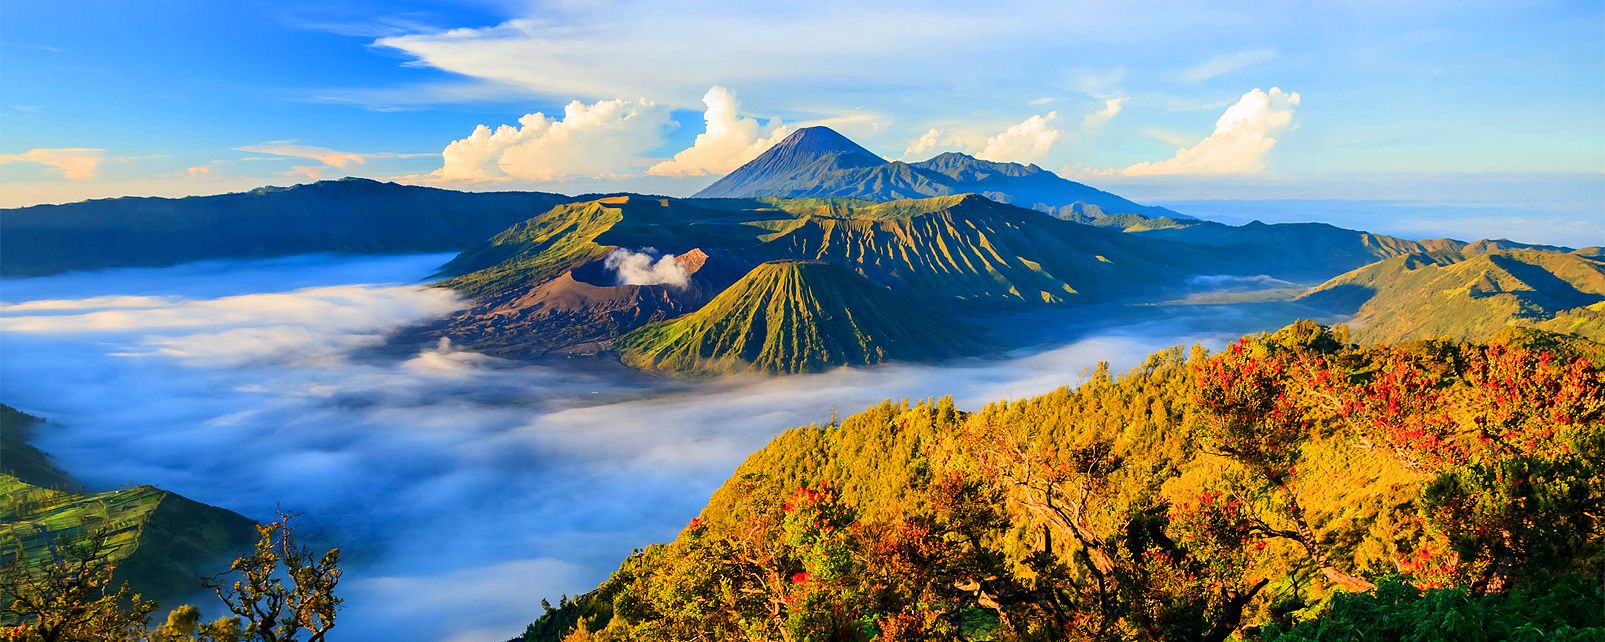 Le volcan Bromo Java  Indon sie 